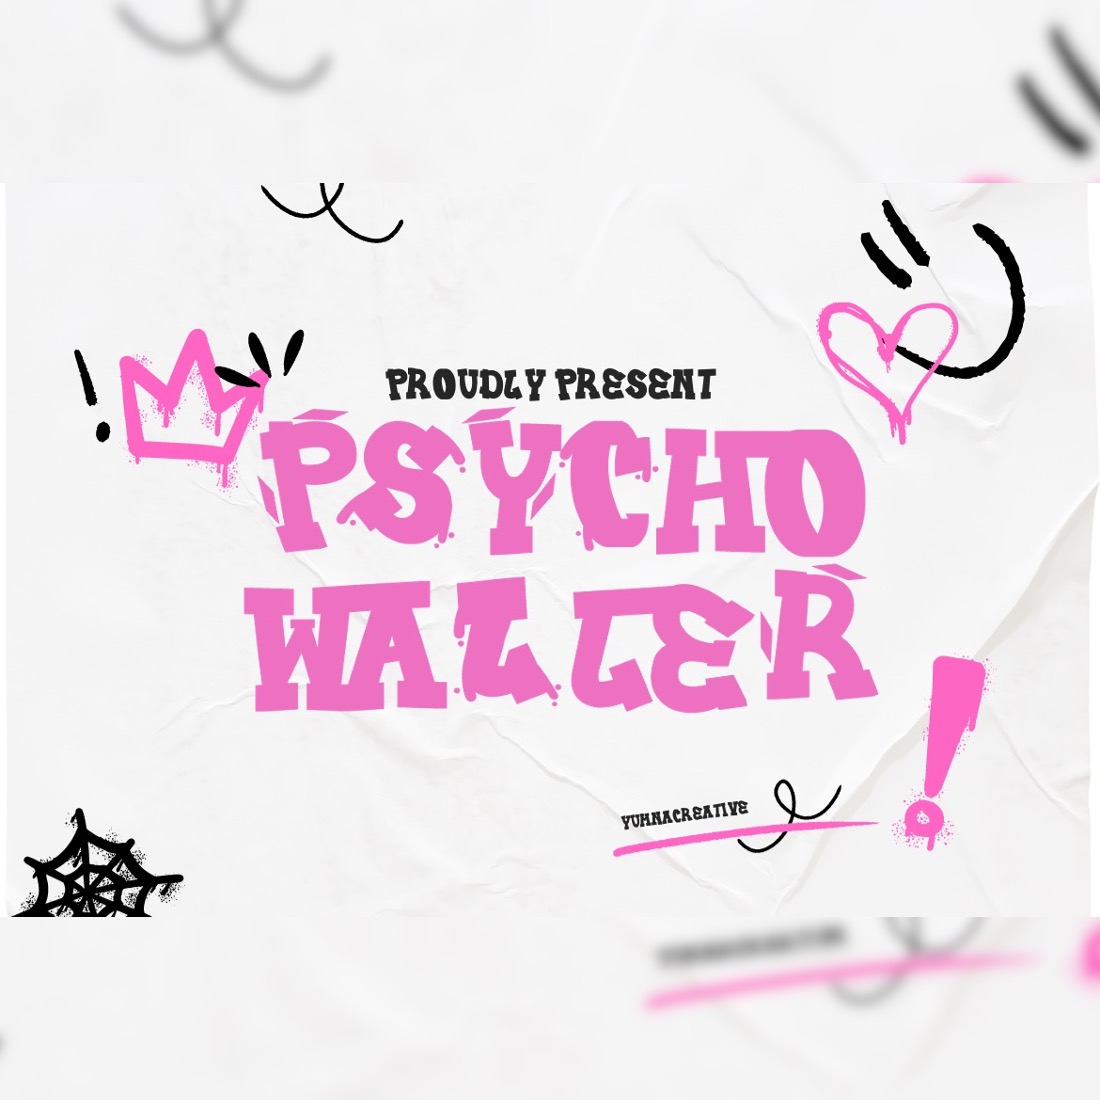 Psycho Waller - Graffiti Font cover image.